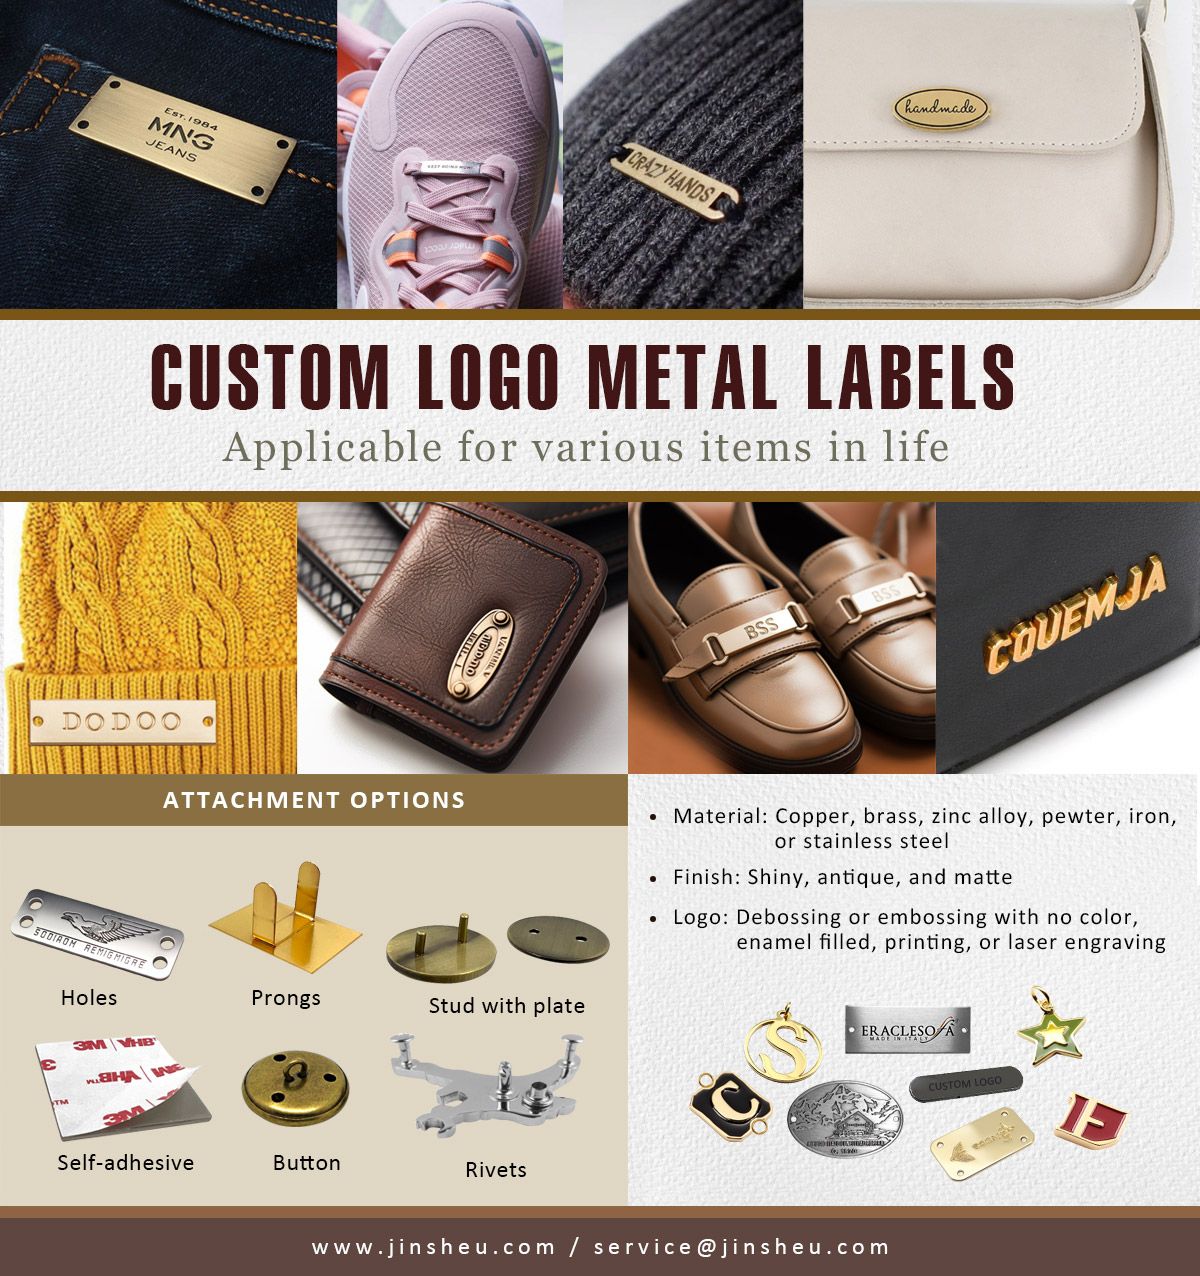 Custom Metal Labels with Brand Logos